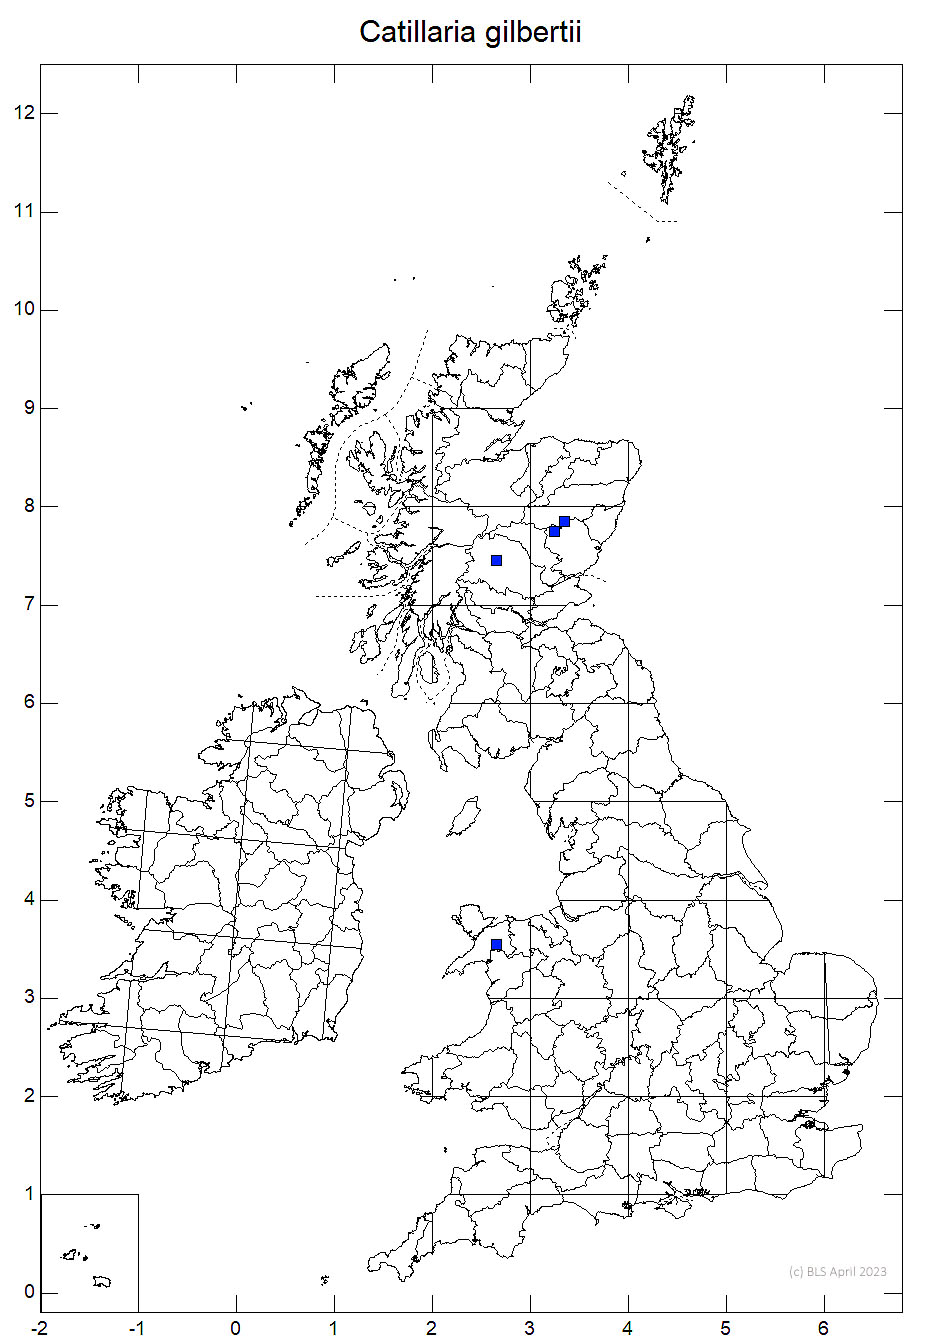 Catillaria gilbertii 10km sq distribution map